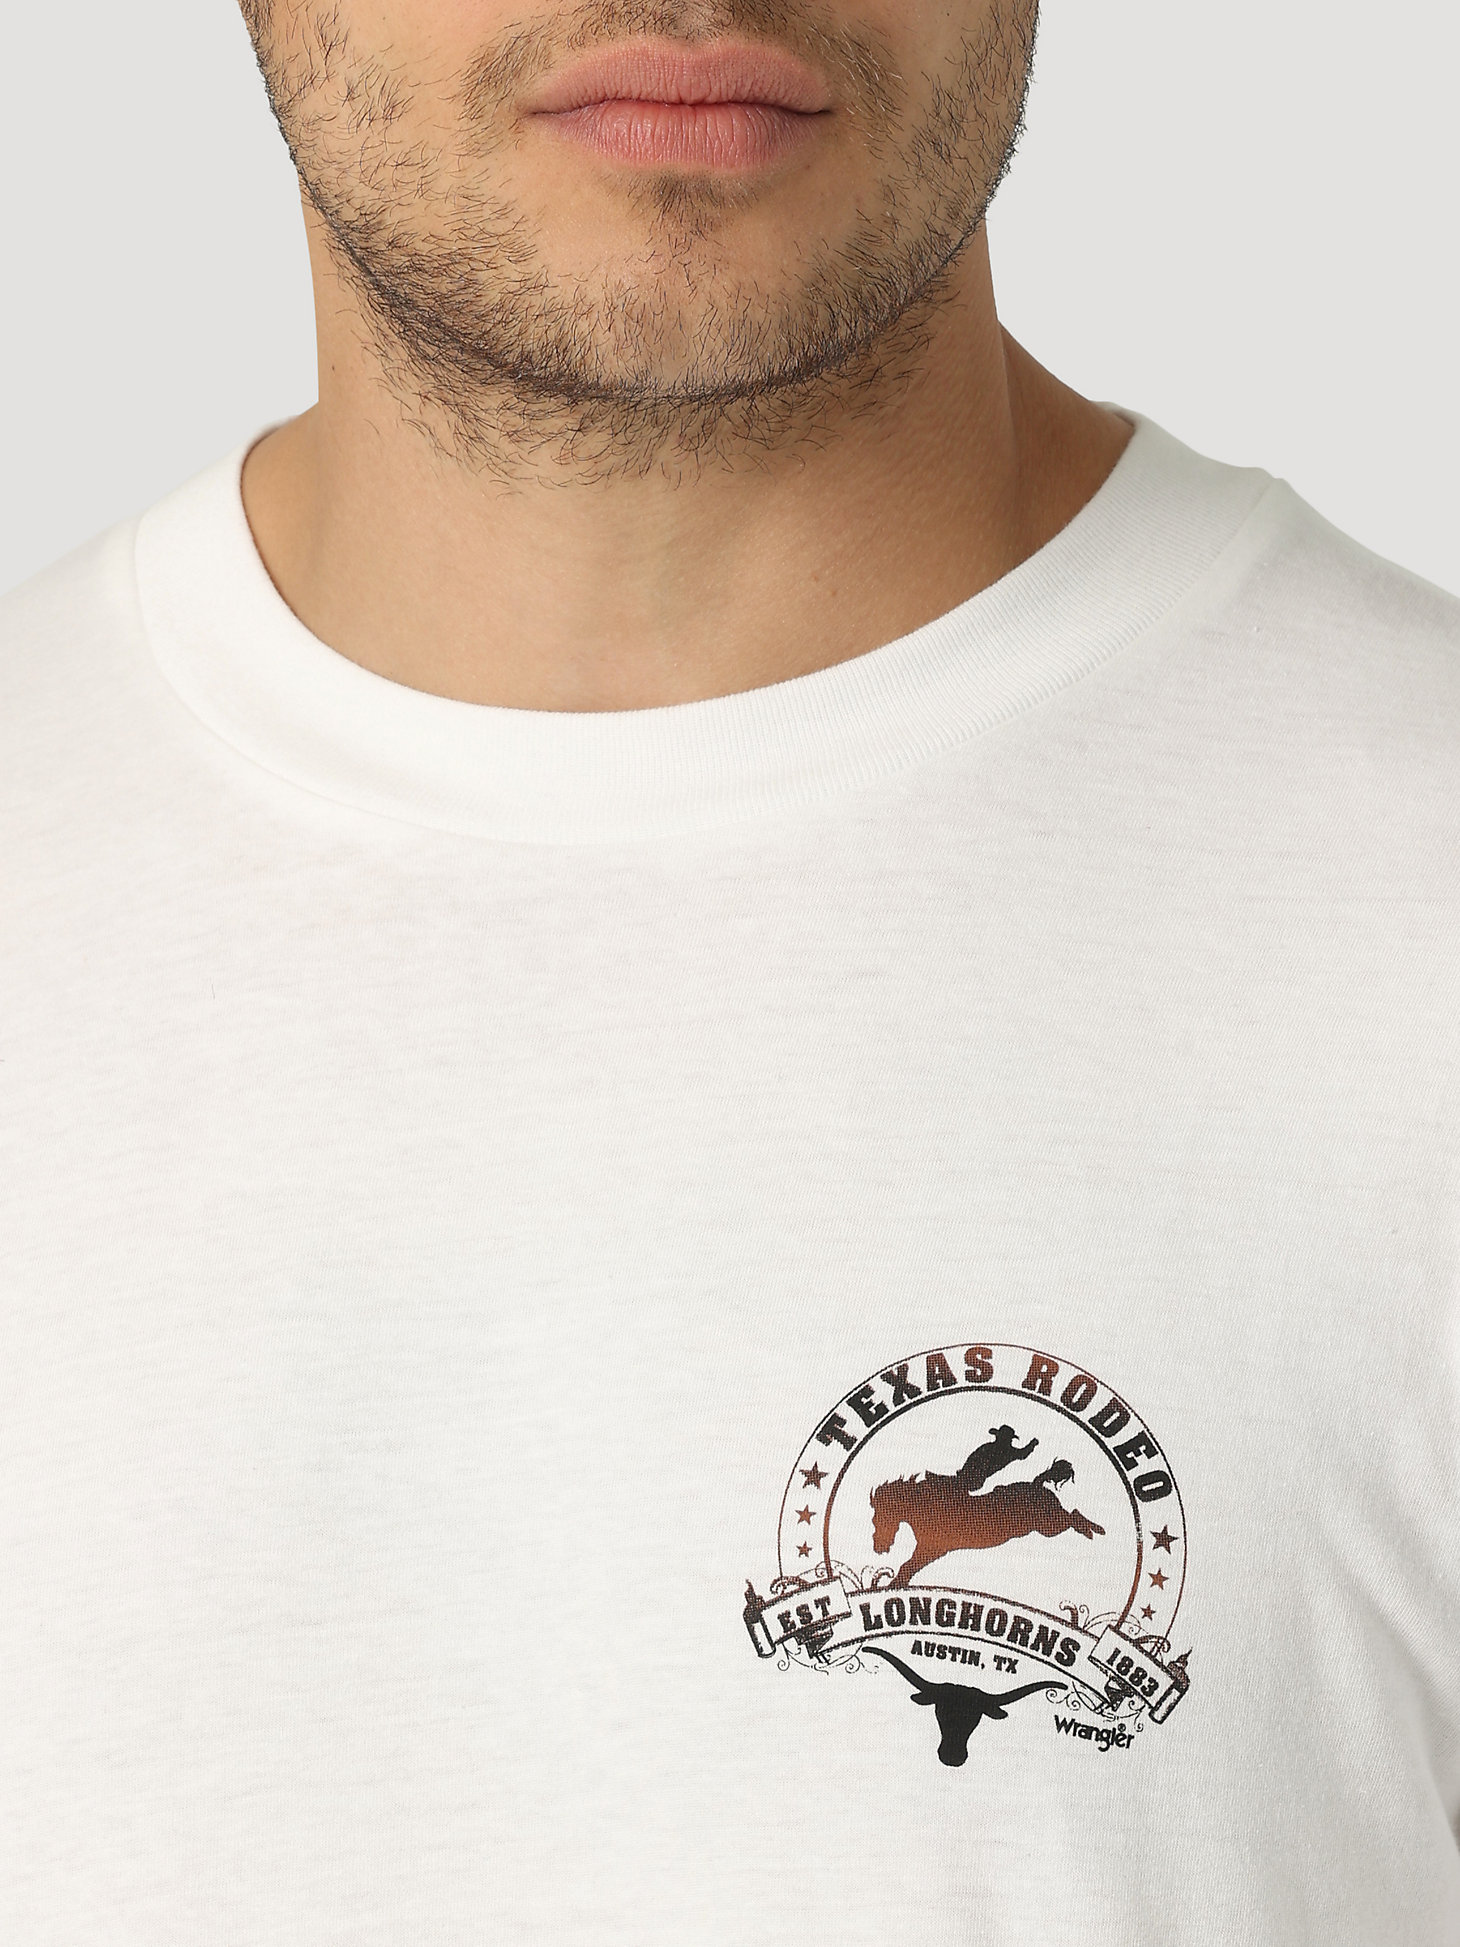 Wrangler Collegiate Rodeo Long Sleeve T-Shirt in University of Texas alternative view 3